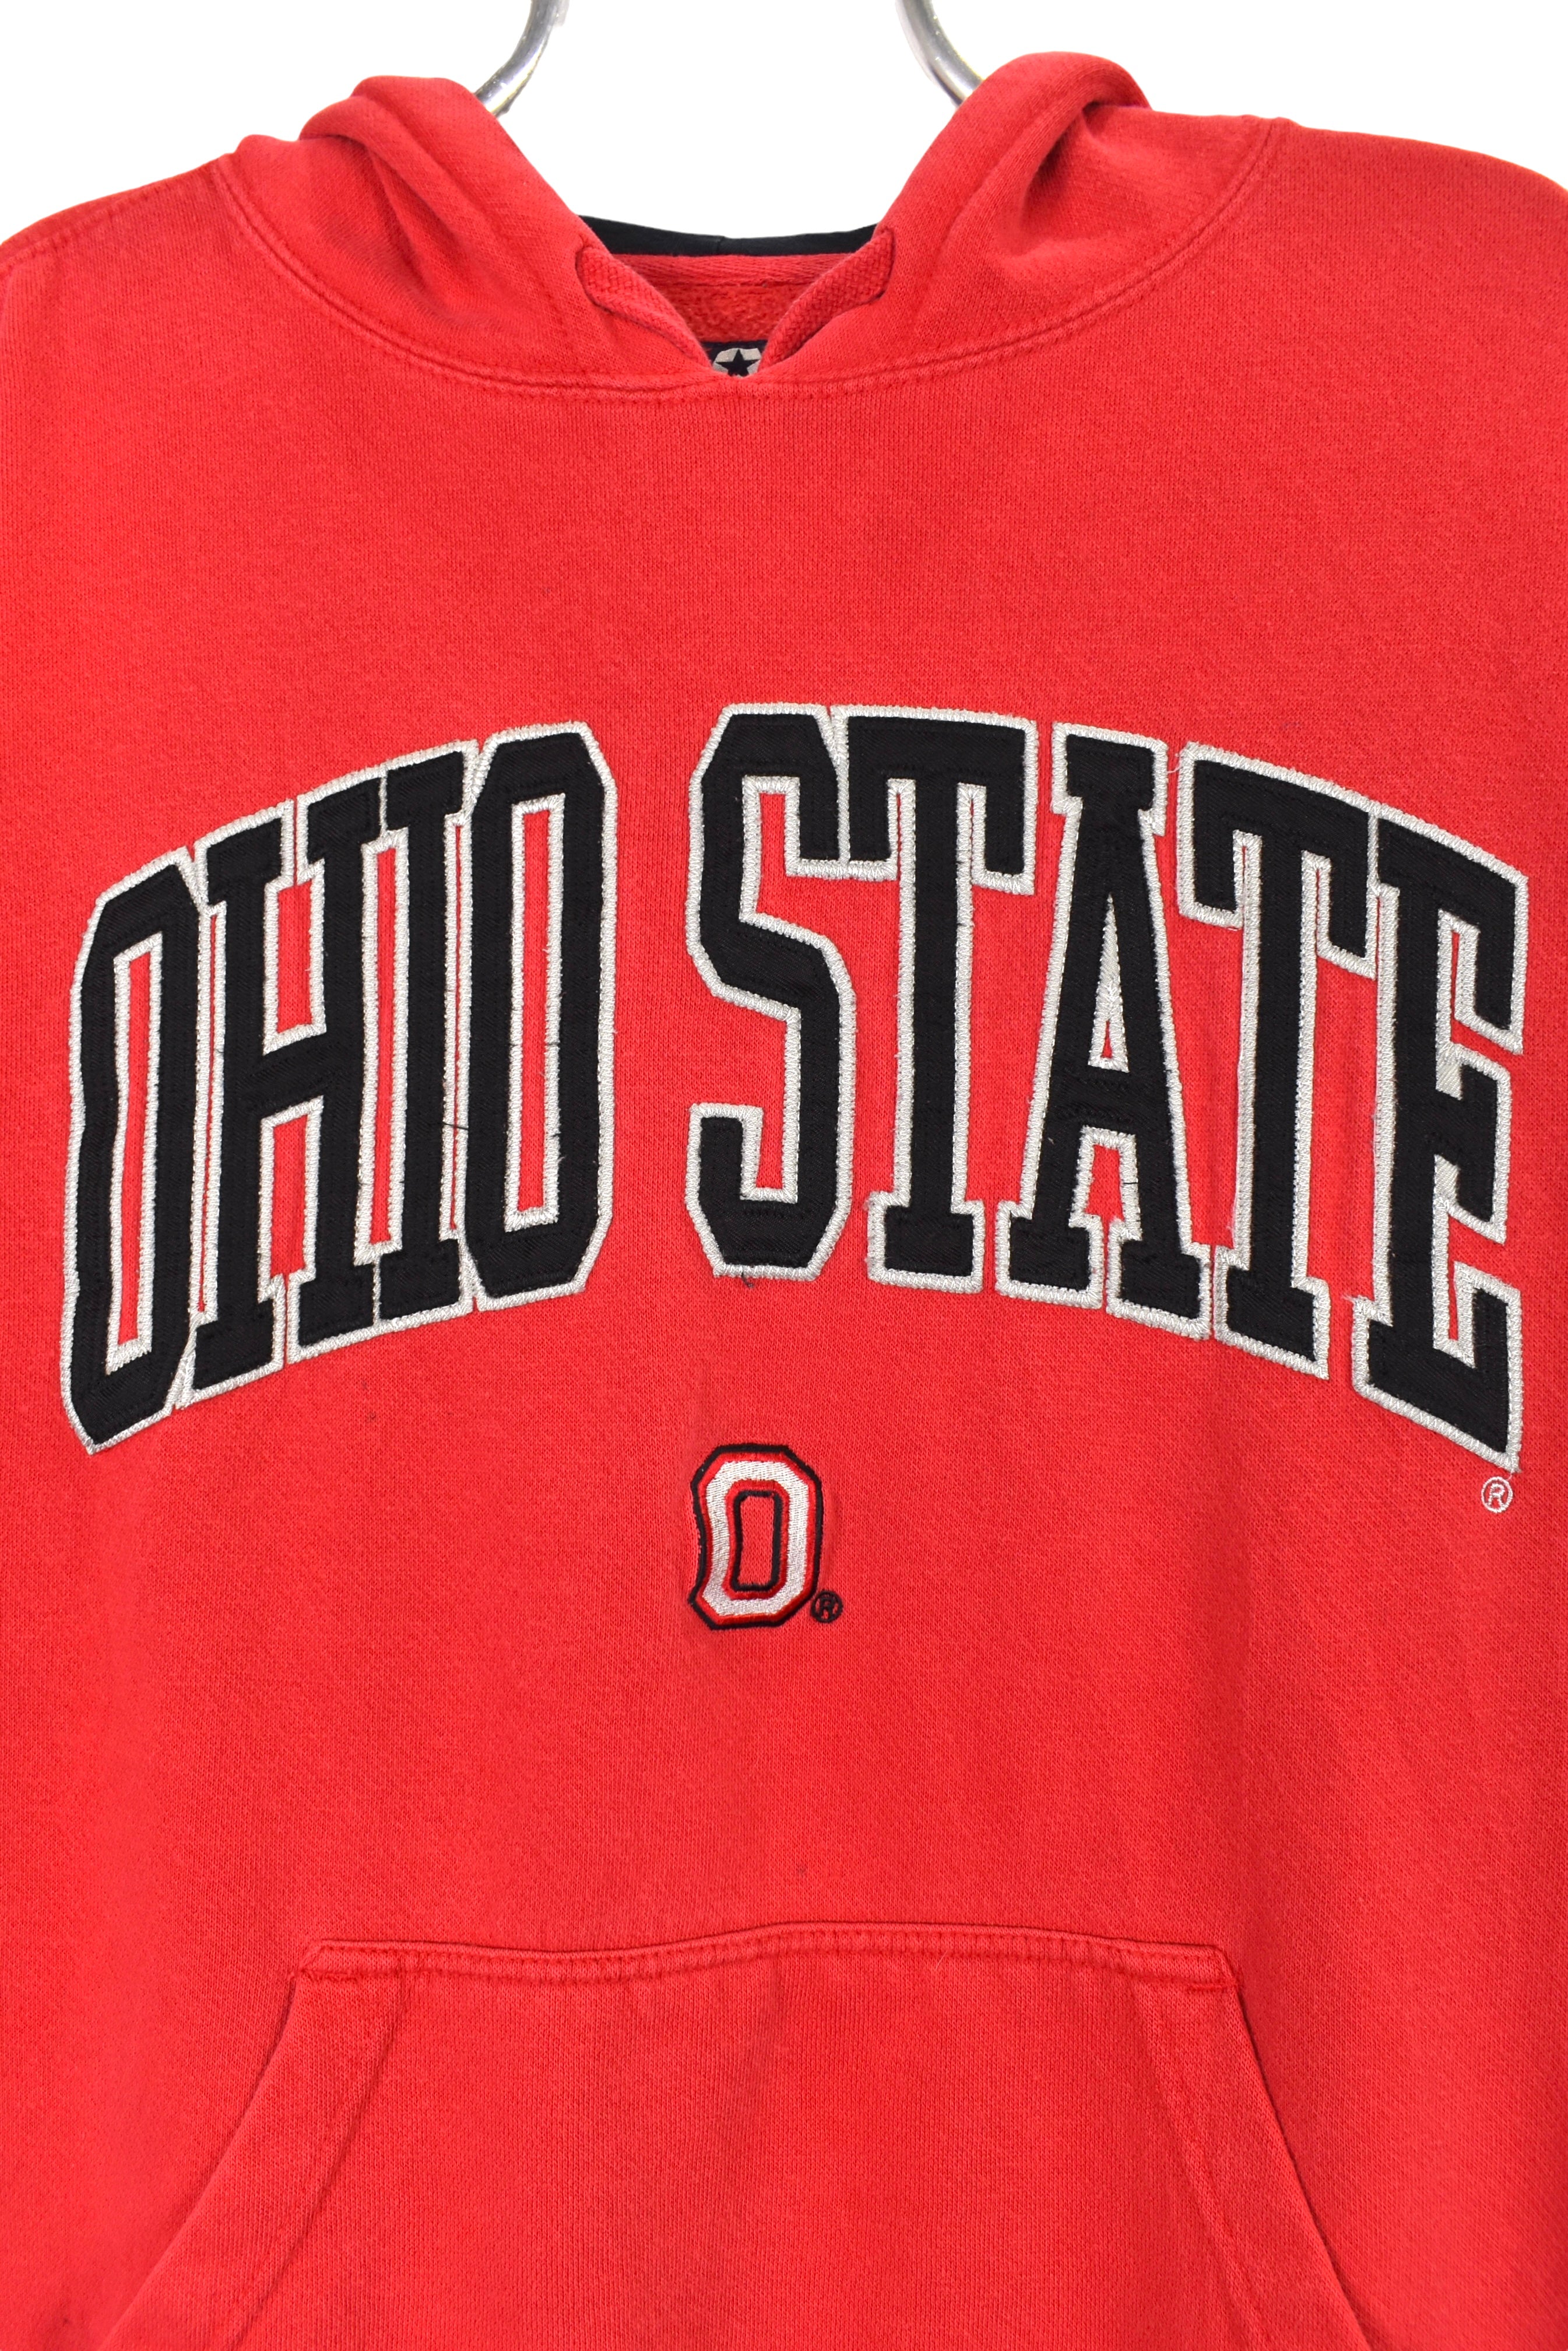 Vintage Ohio State University hoodie, red embroidered sweatshirt - Large